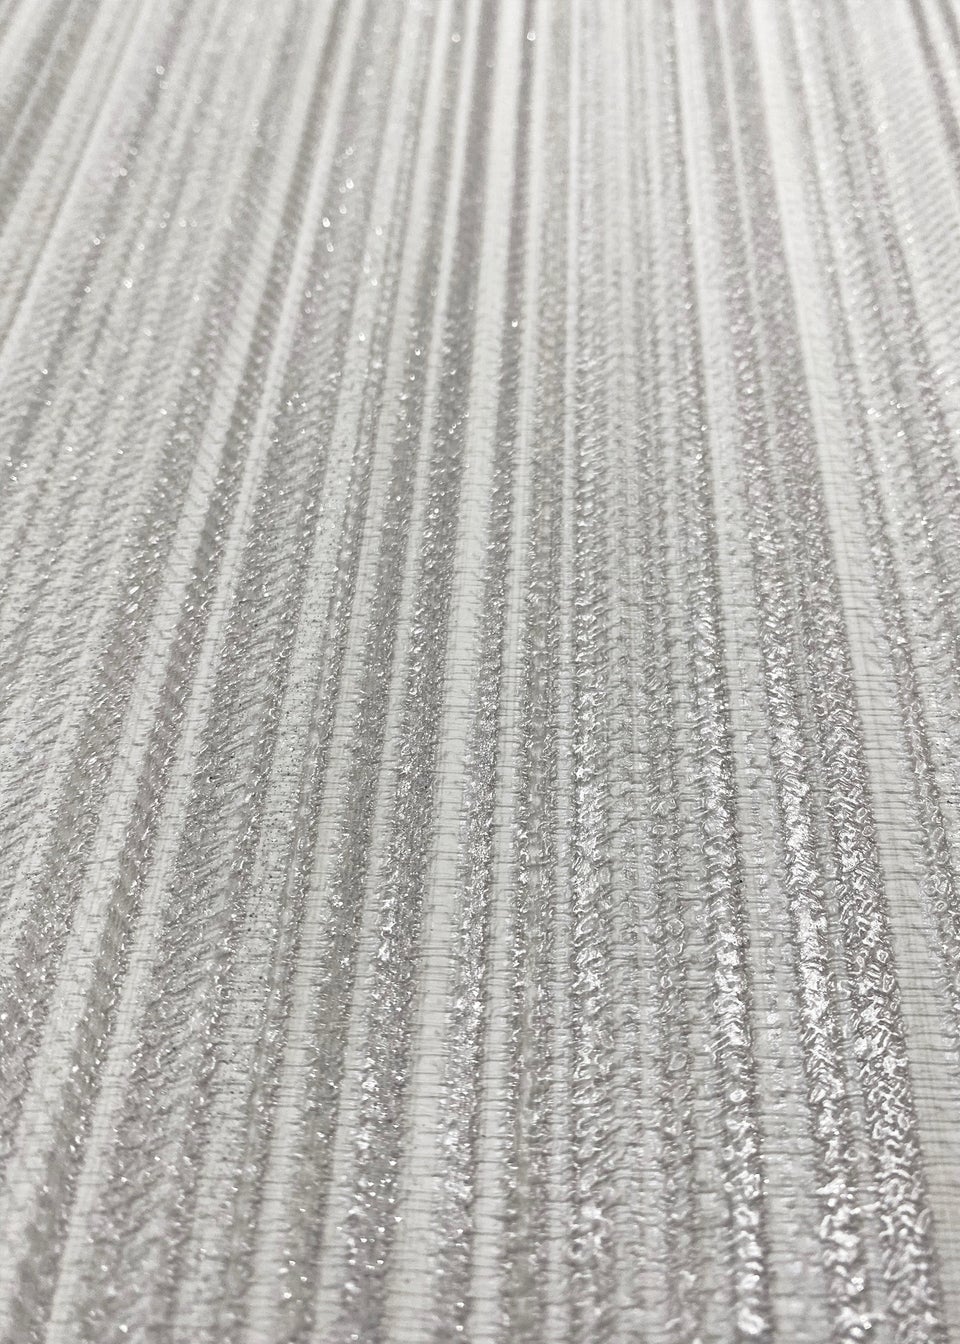 Muriva Venezia Stripe Light Grey